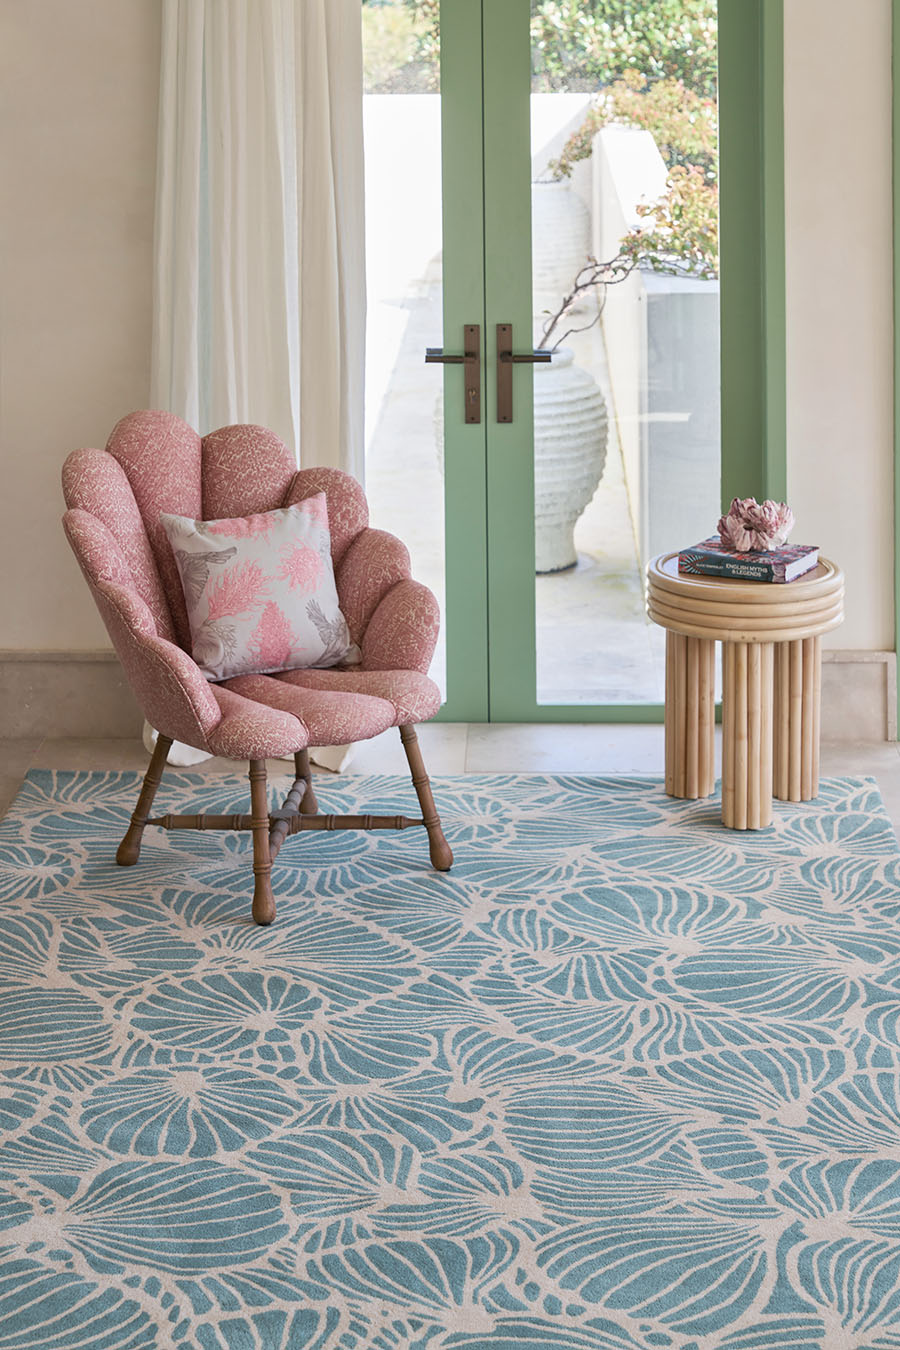 Living room image of blue Mallee Buds rug